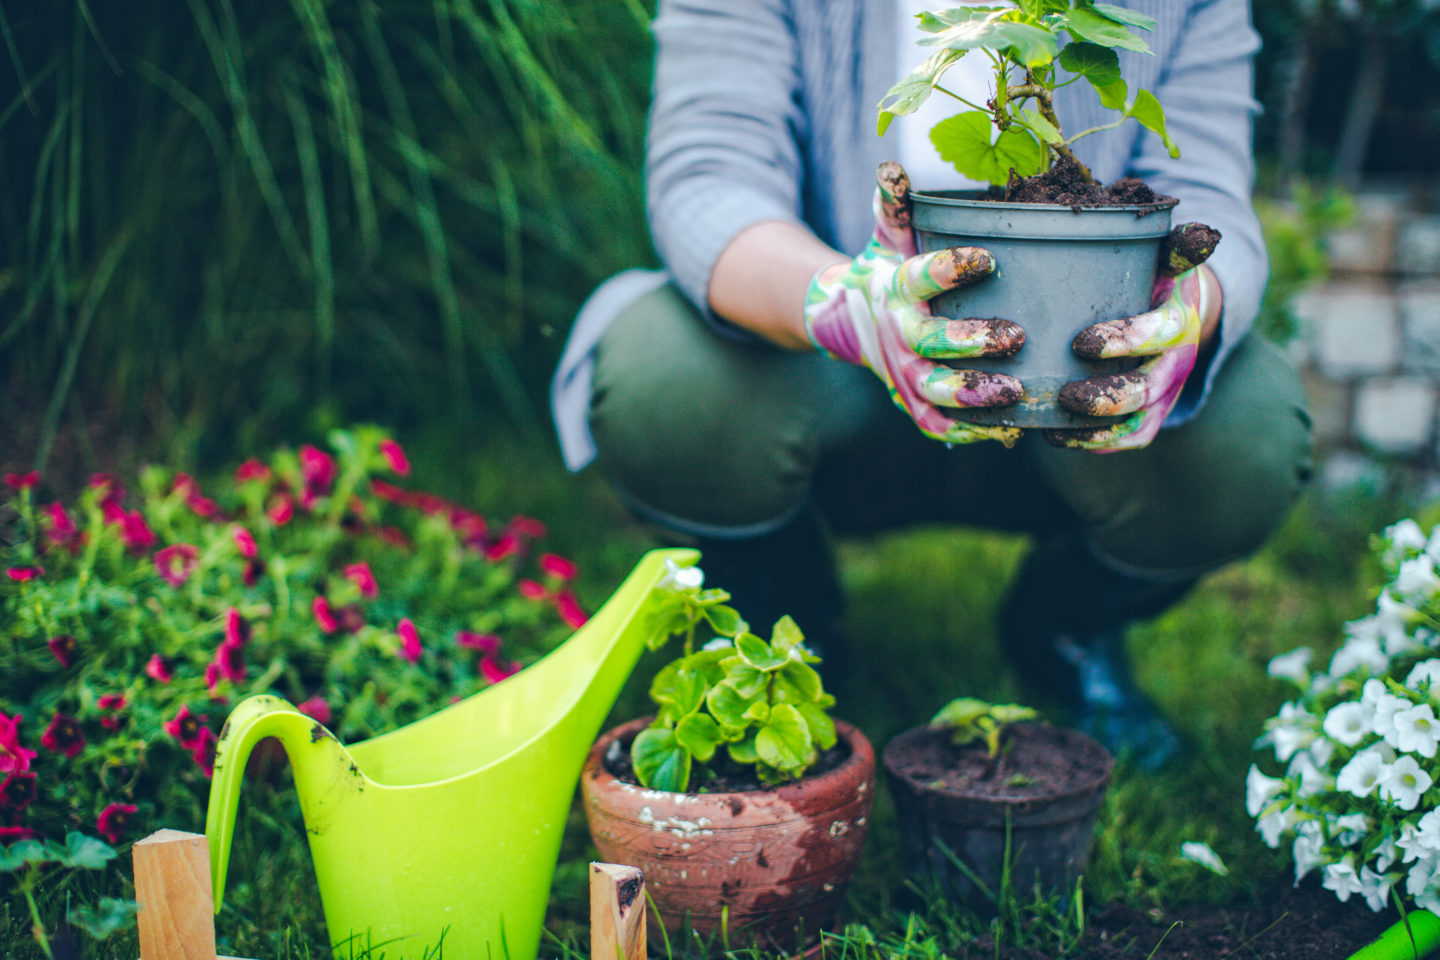 How Gardening Helped My Depression